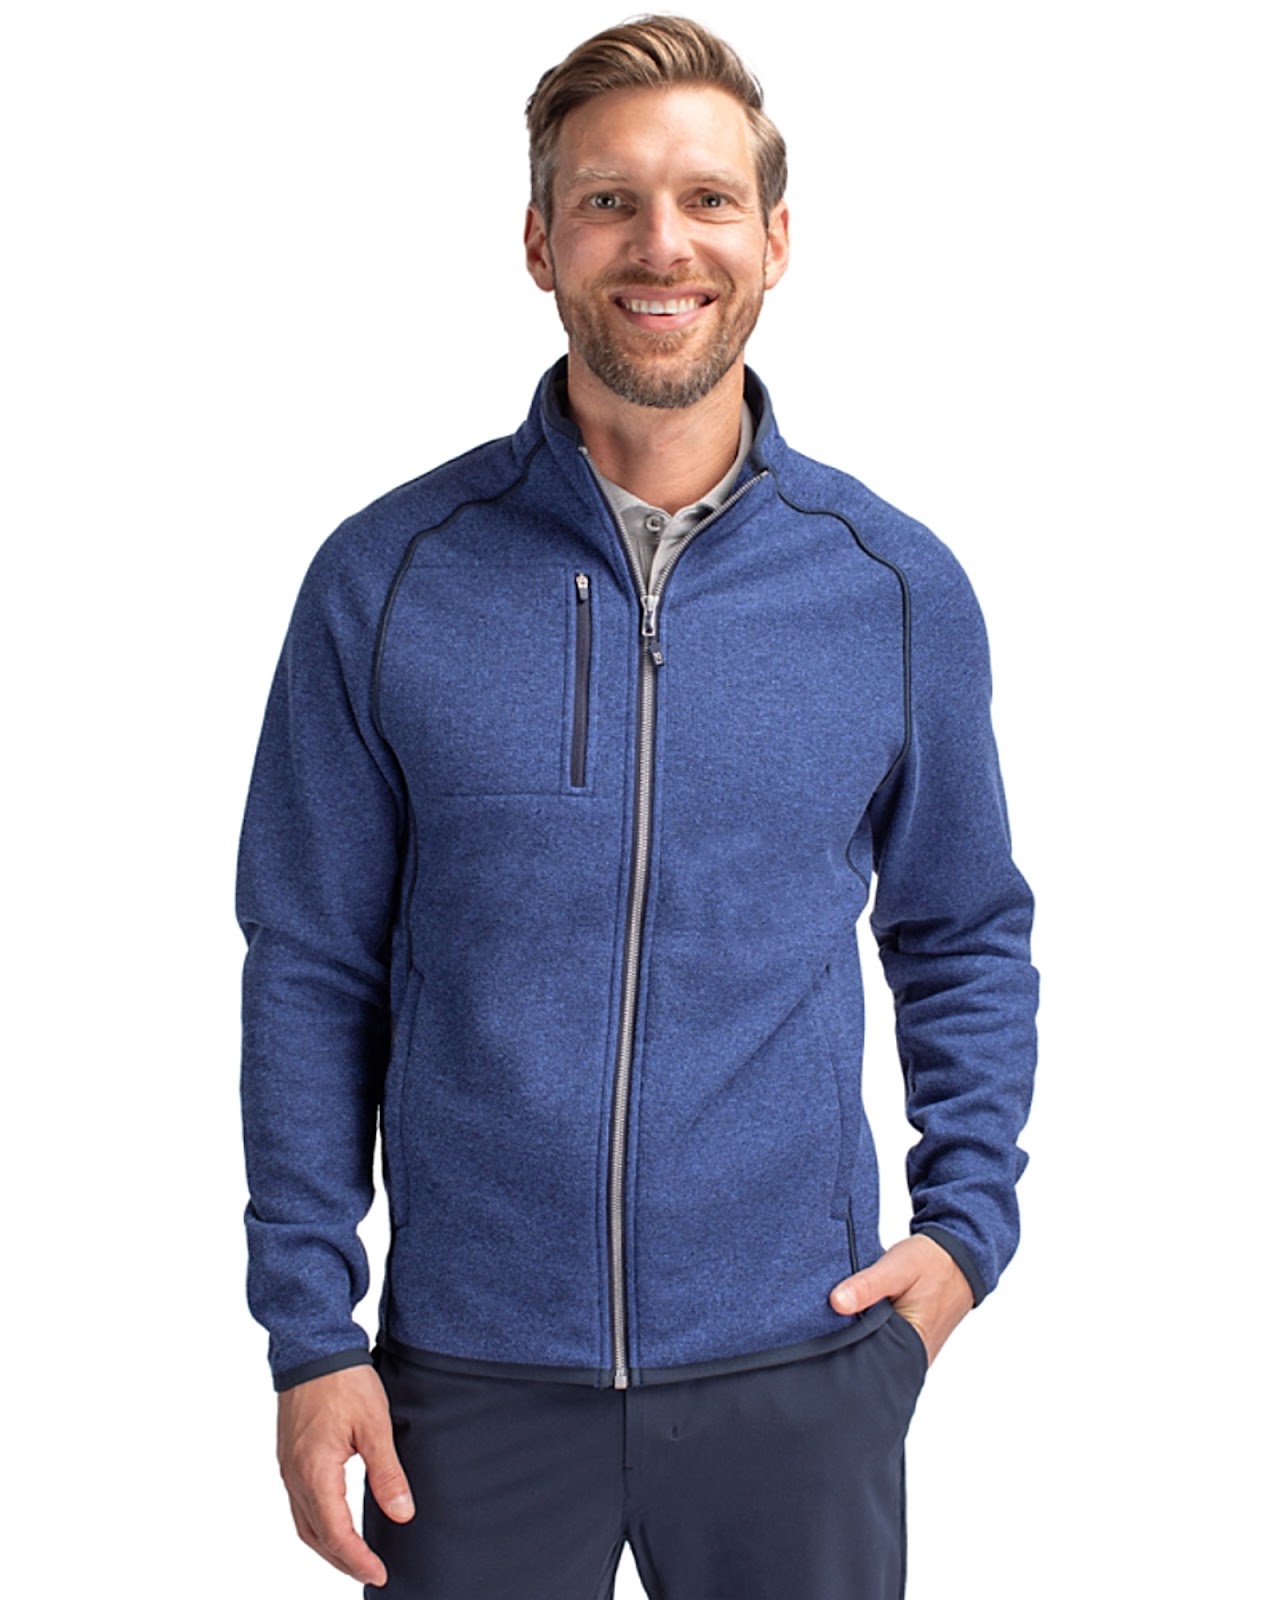 Best sweater knit mens fleece jacket for outdoor lovers in 2023